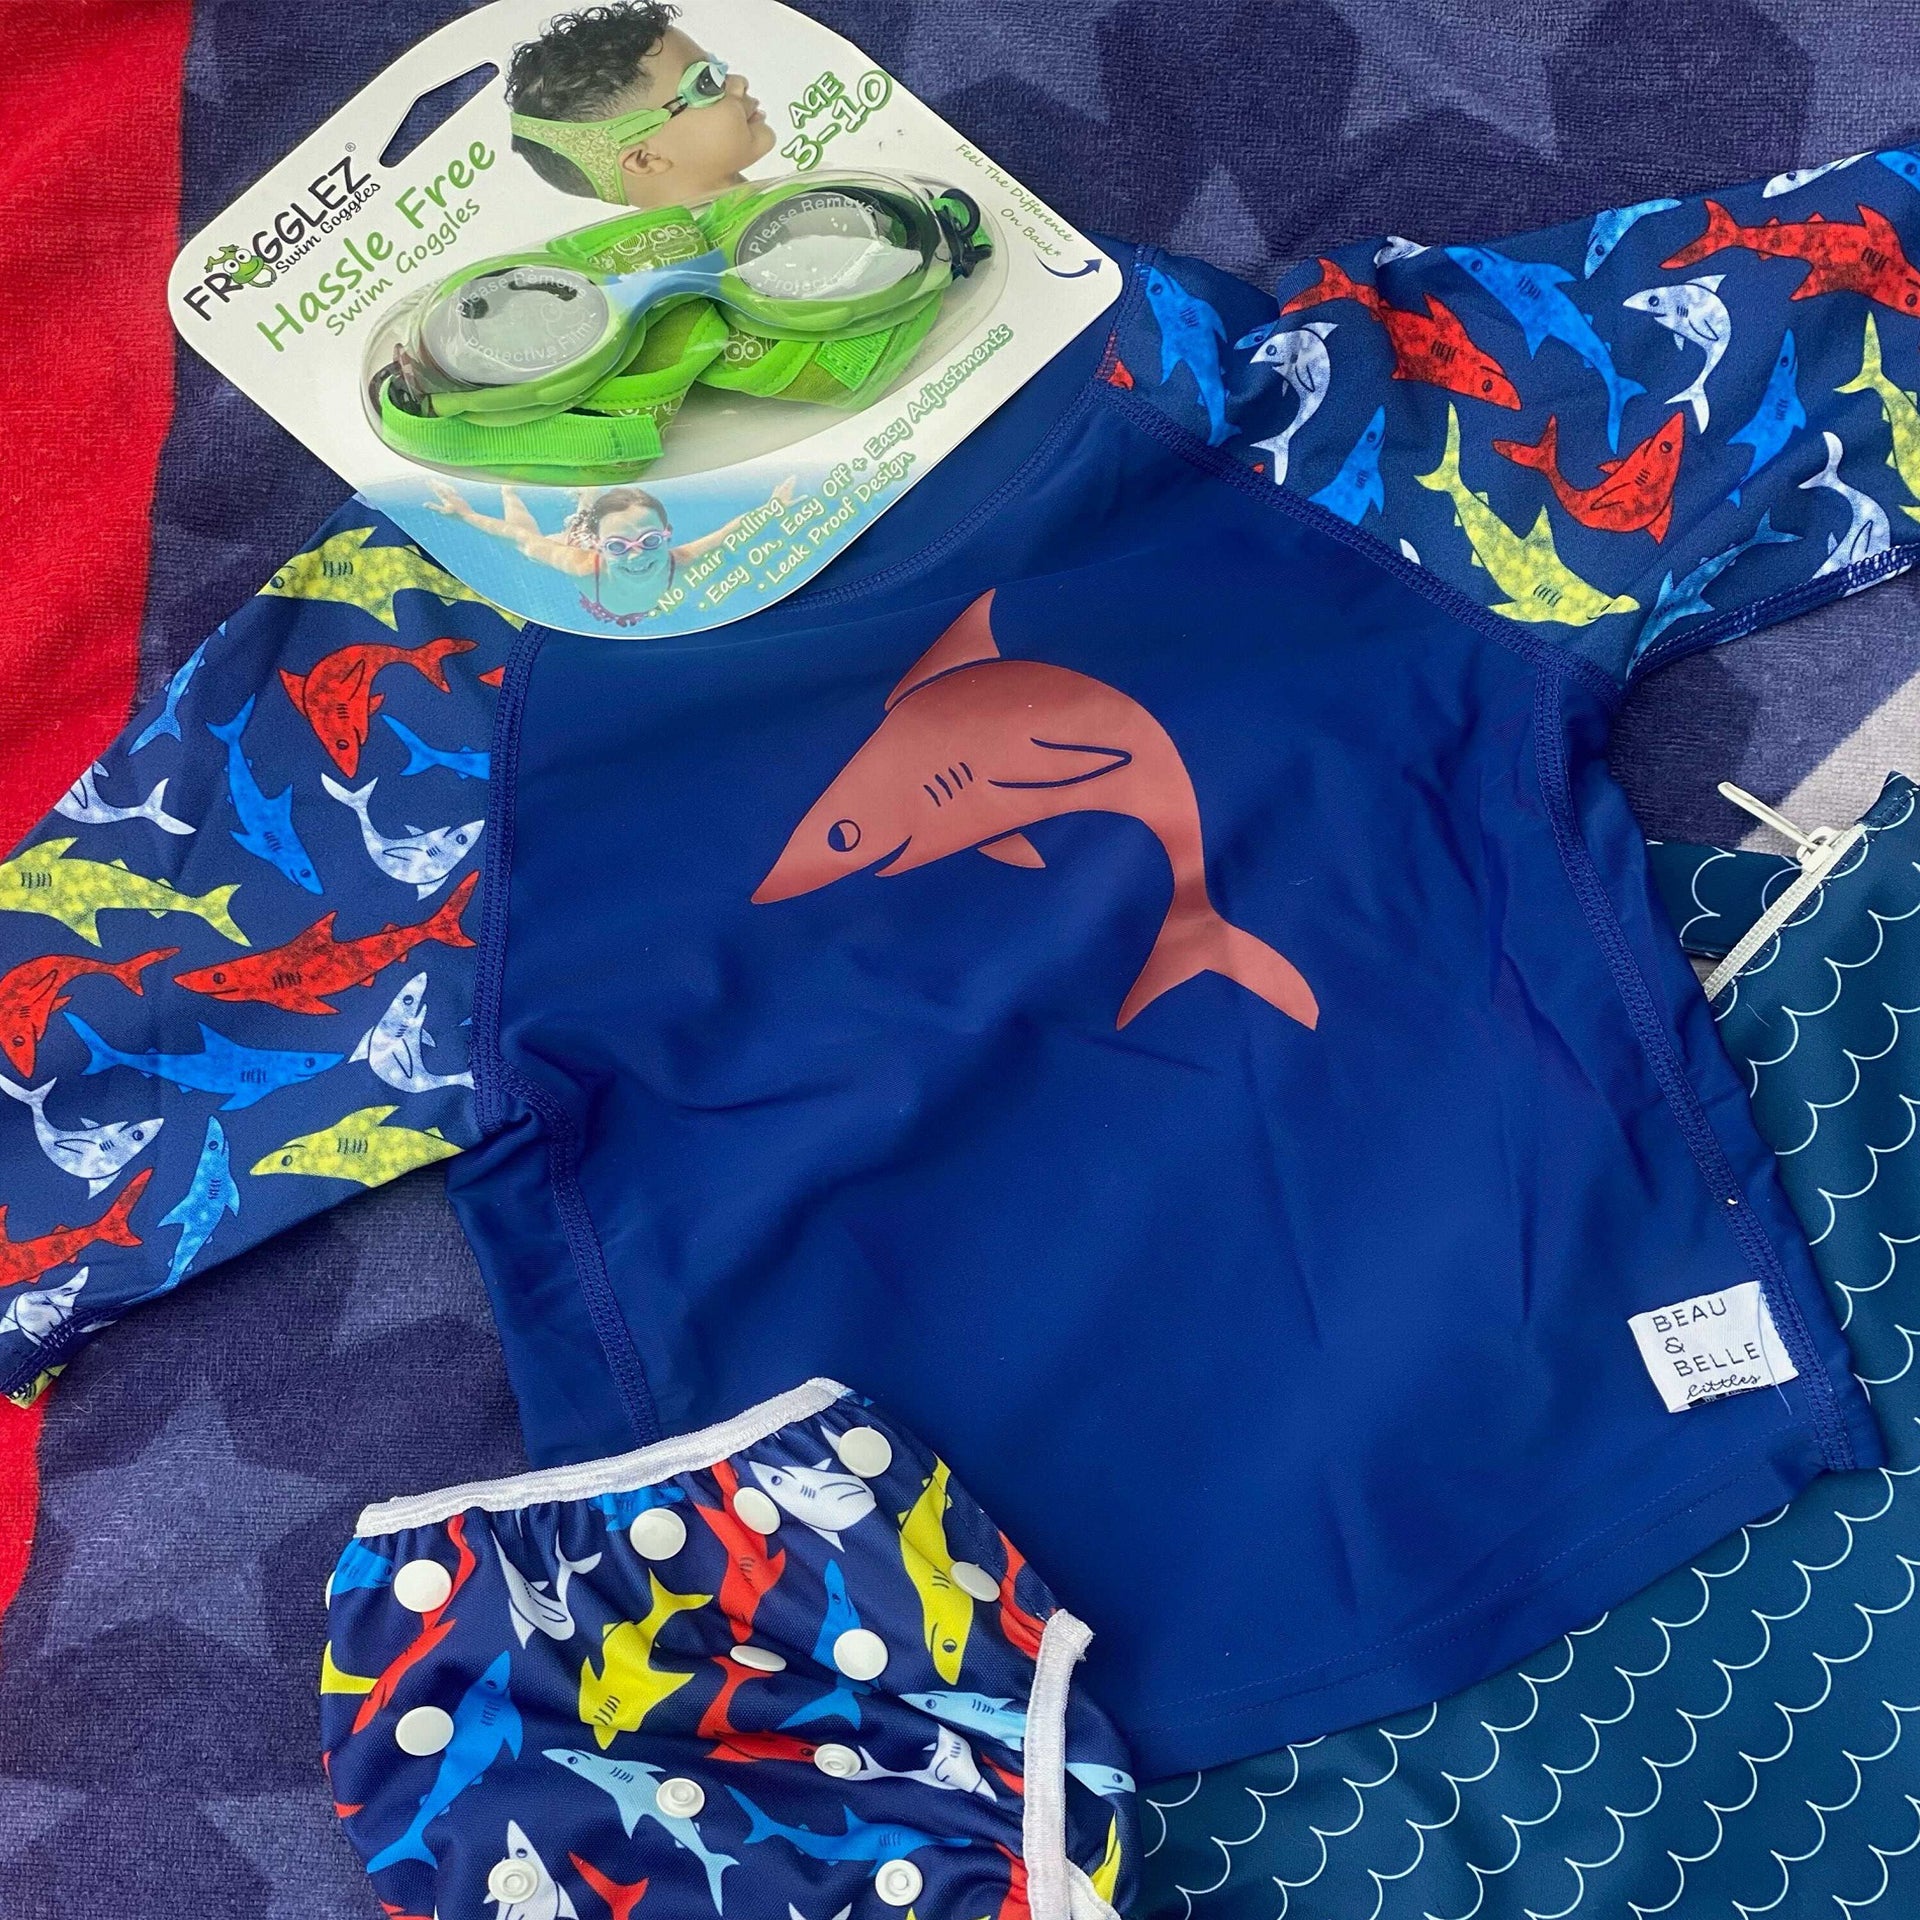 Swimming starter kit for boys with frogglez goggles, shark rash guard, reusable swim diaper.